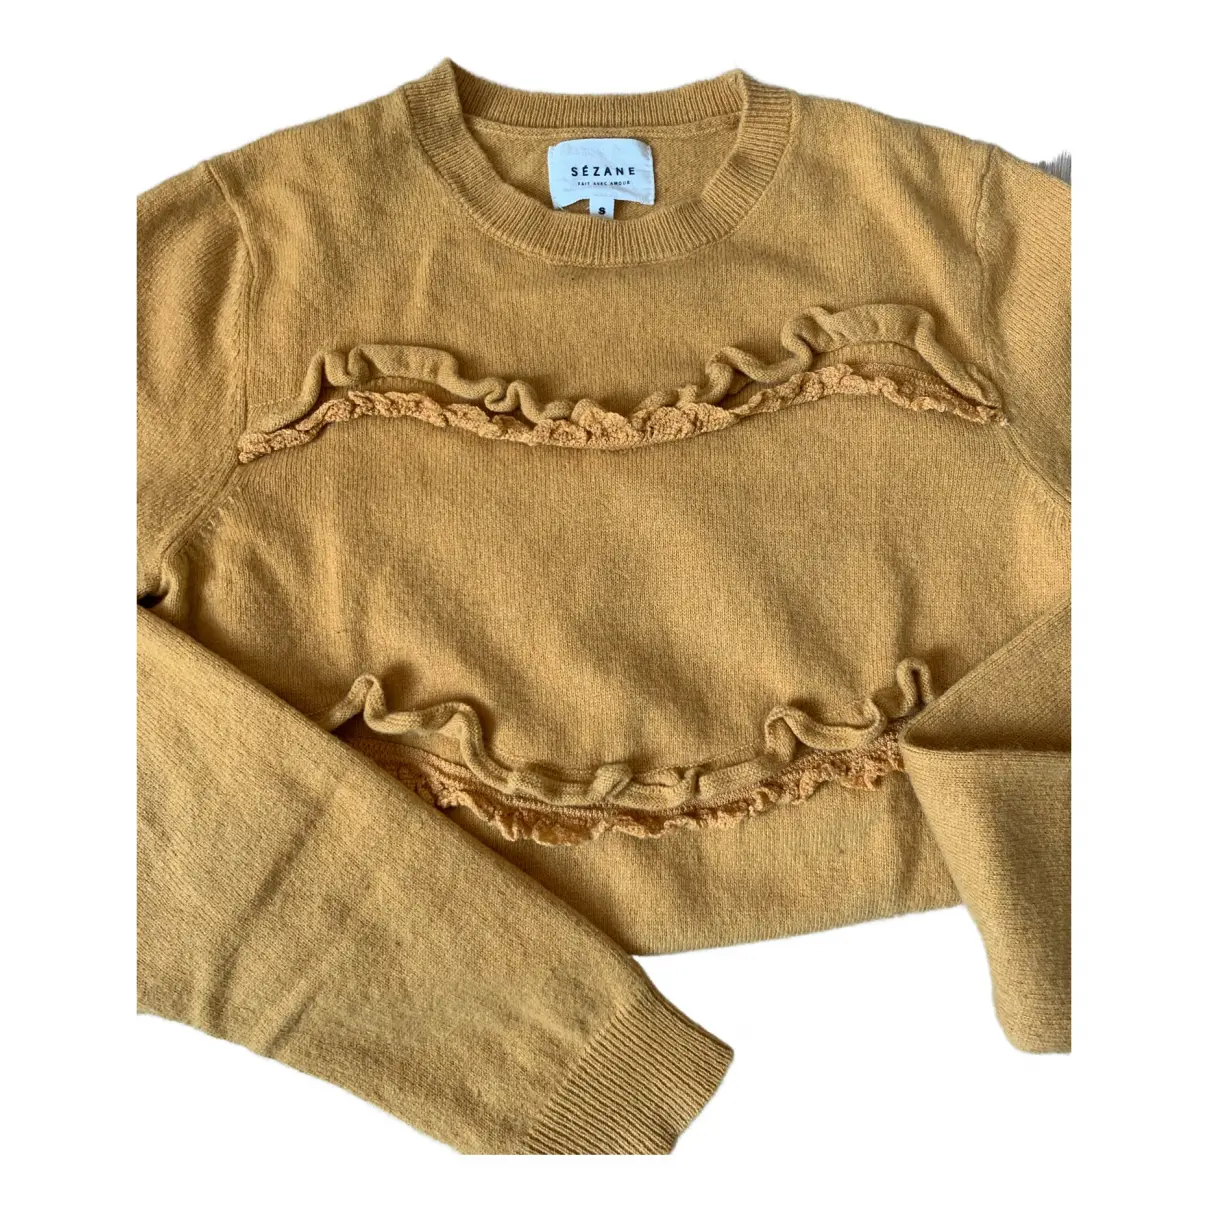 Buy Sézane Fall Winter 2019 cashmere jumper online